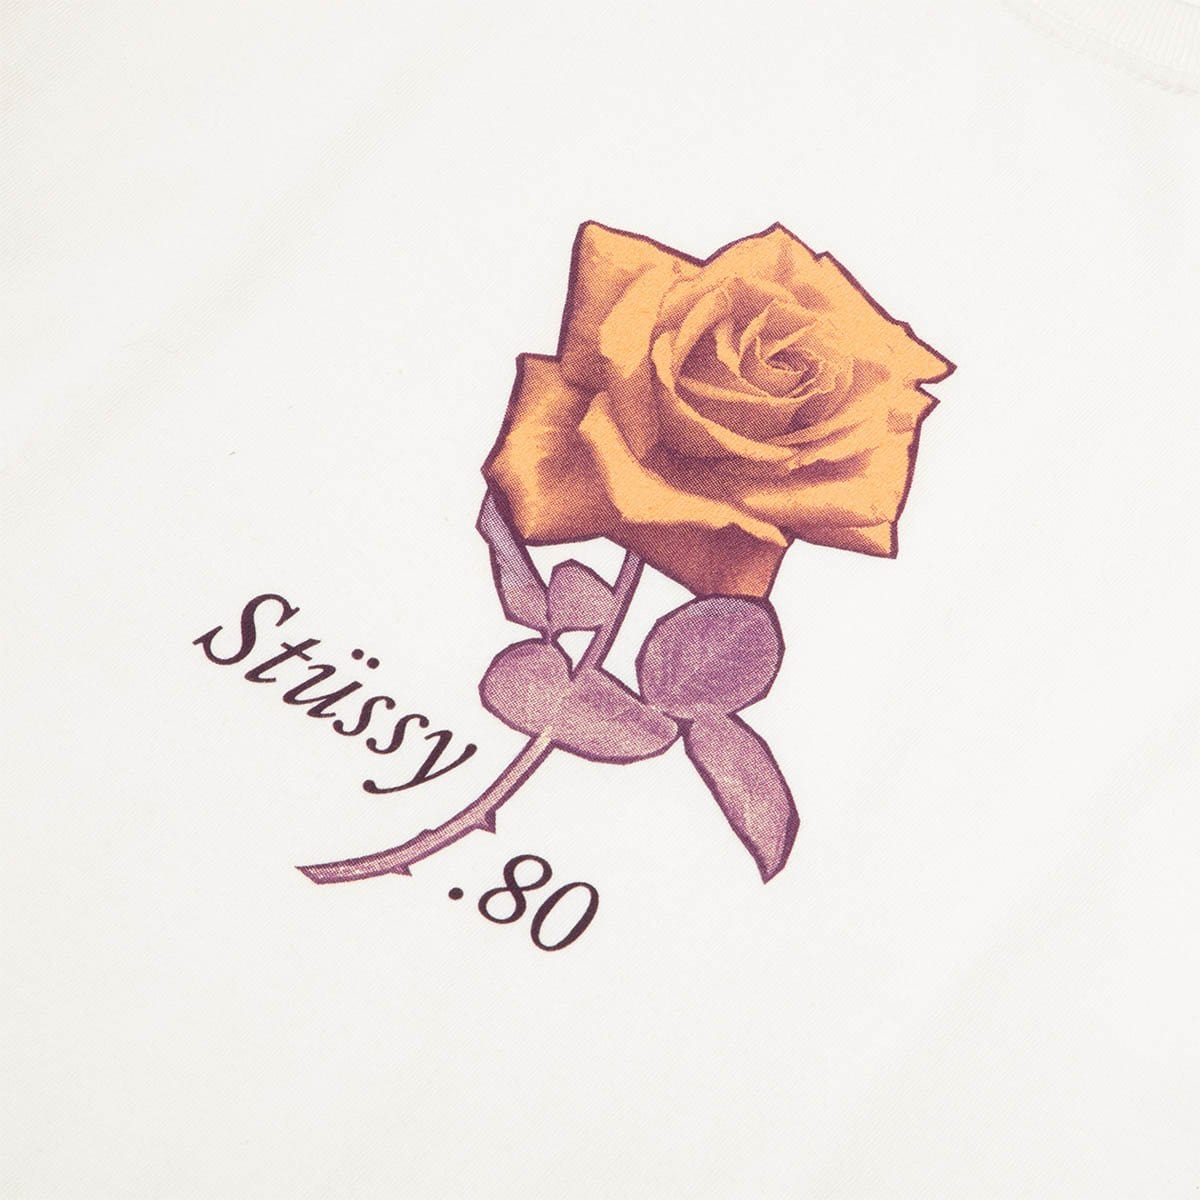 Stüssy T-Shirts 80 ROSE PIG. DYED TEE